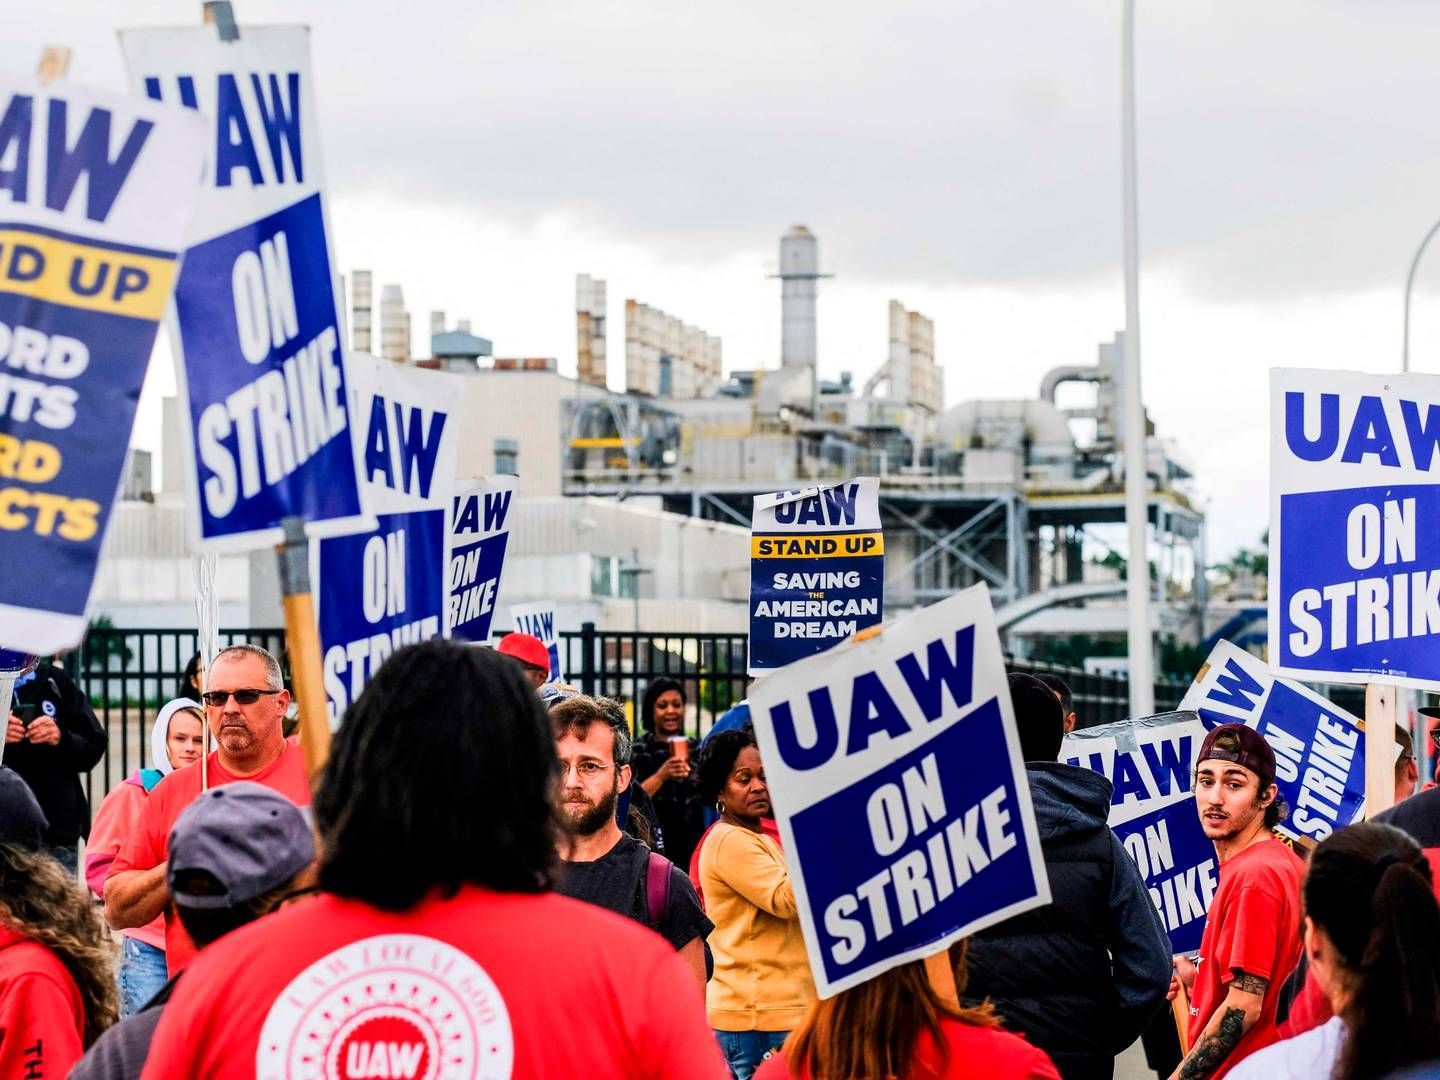 Strejkende medlemmer af United Auto Workers. | Foto: Matthew Hatcher/AFP/Ritzau Scanpix